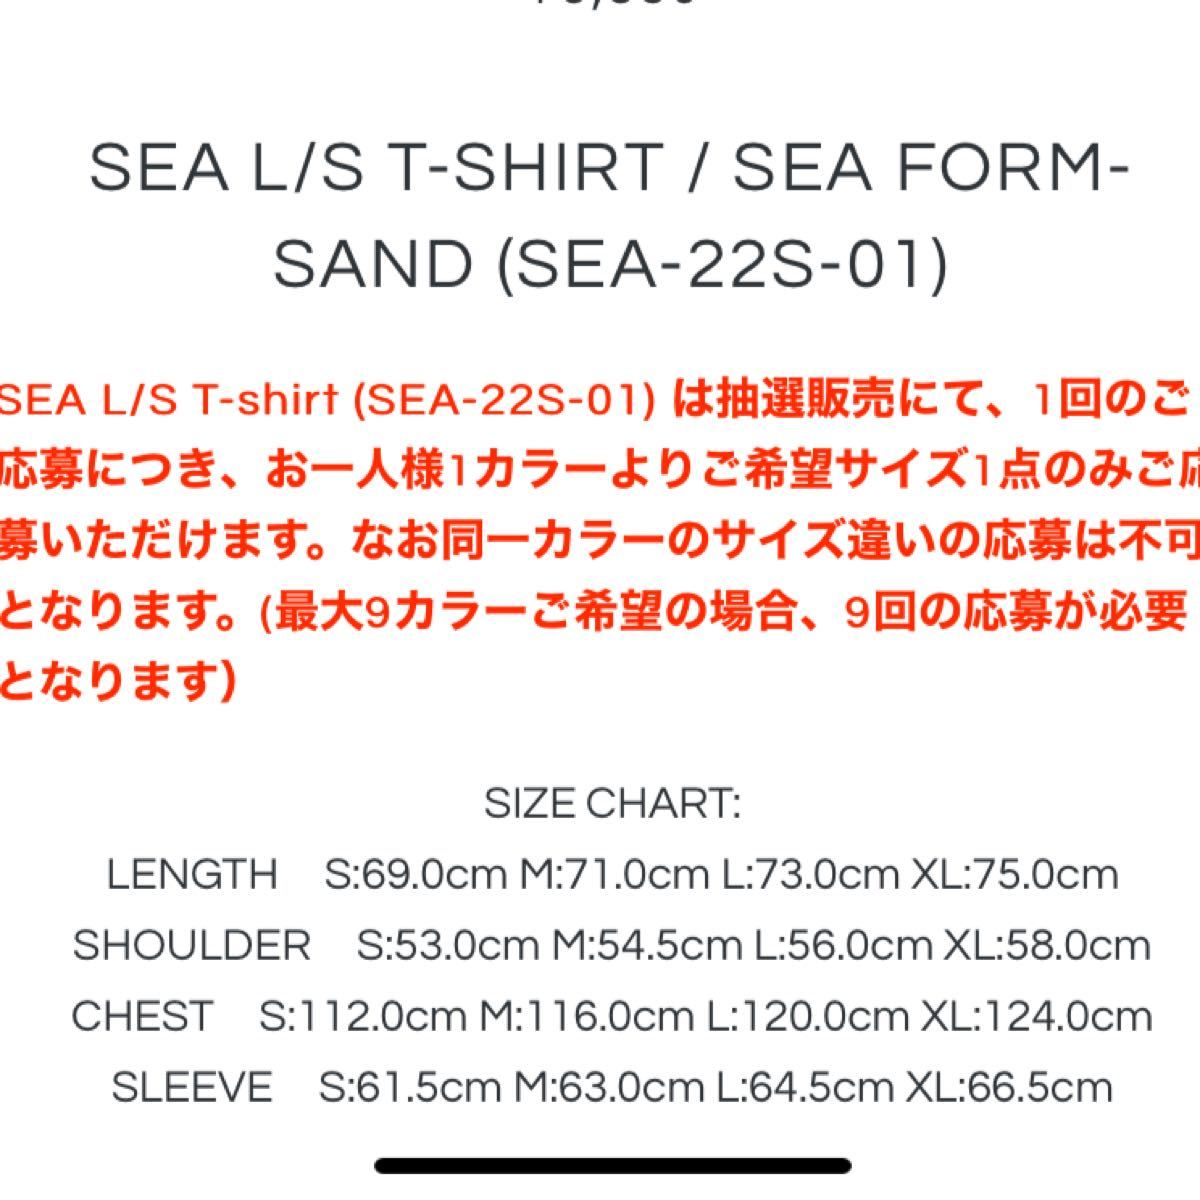 SEA L/S T-shirt / SEA Form-Sand (SEA-22S-01) - L | laninternet.com.br